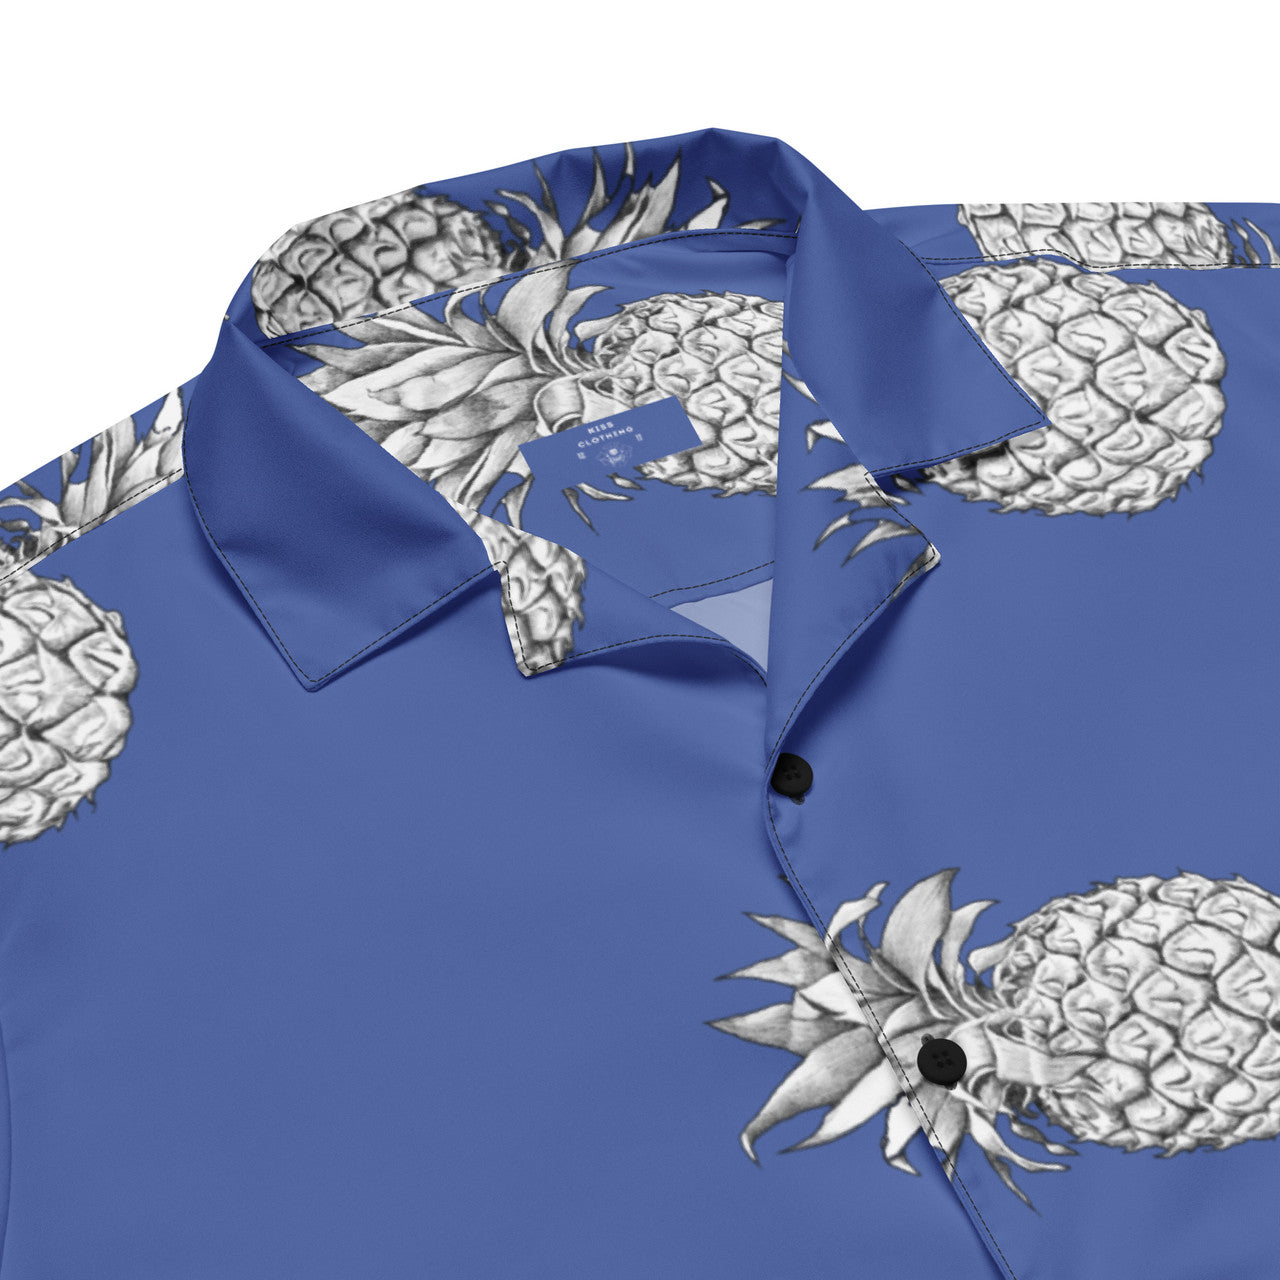 Joey Pineapple KiSS Unisex button shirt - Friends Tribbiani Blue shirt